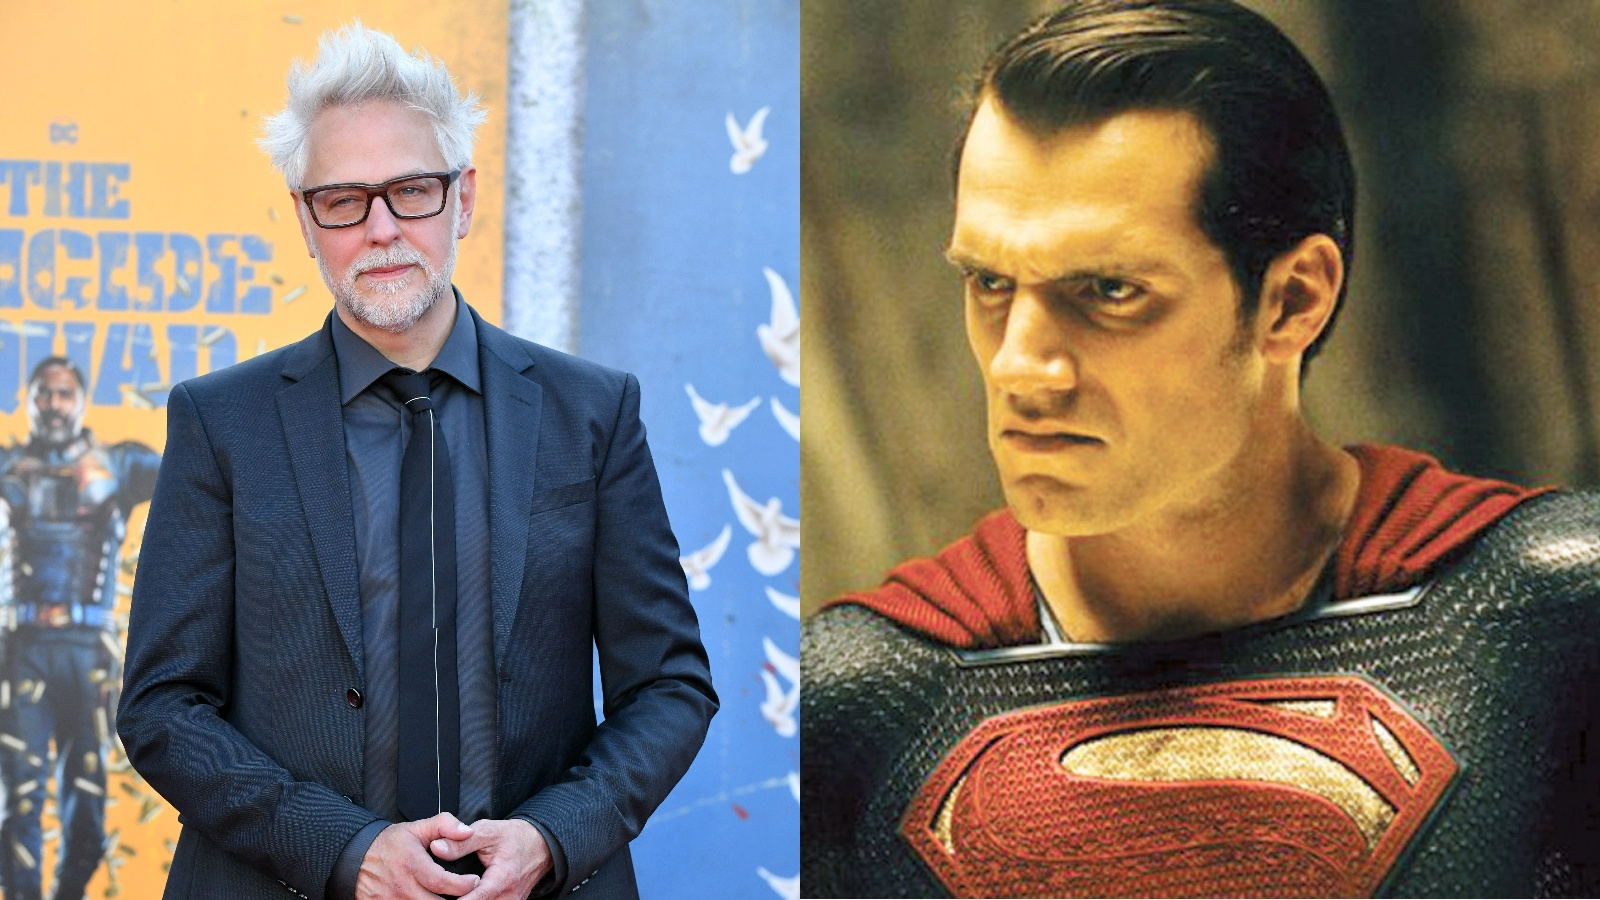 James Gunn says Henry Cavill was never recast as Superman